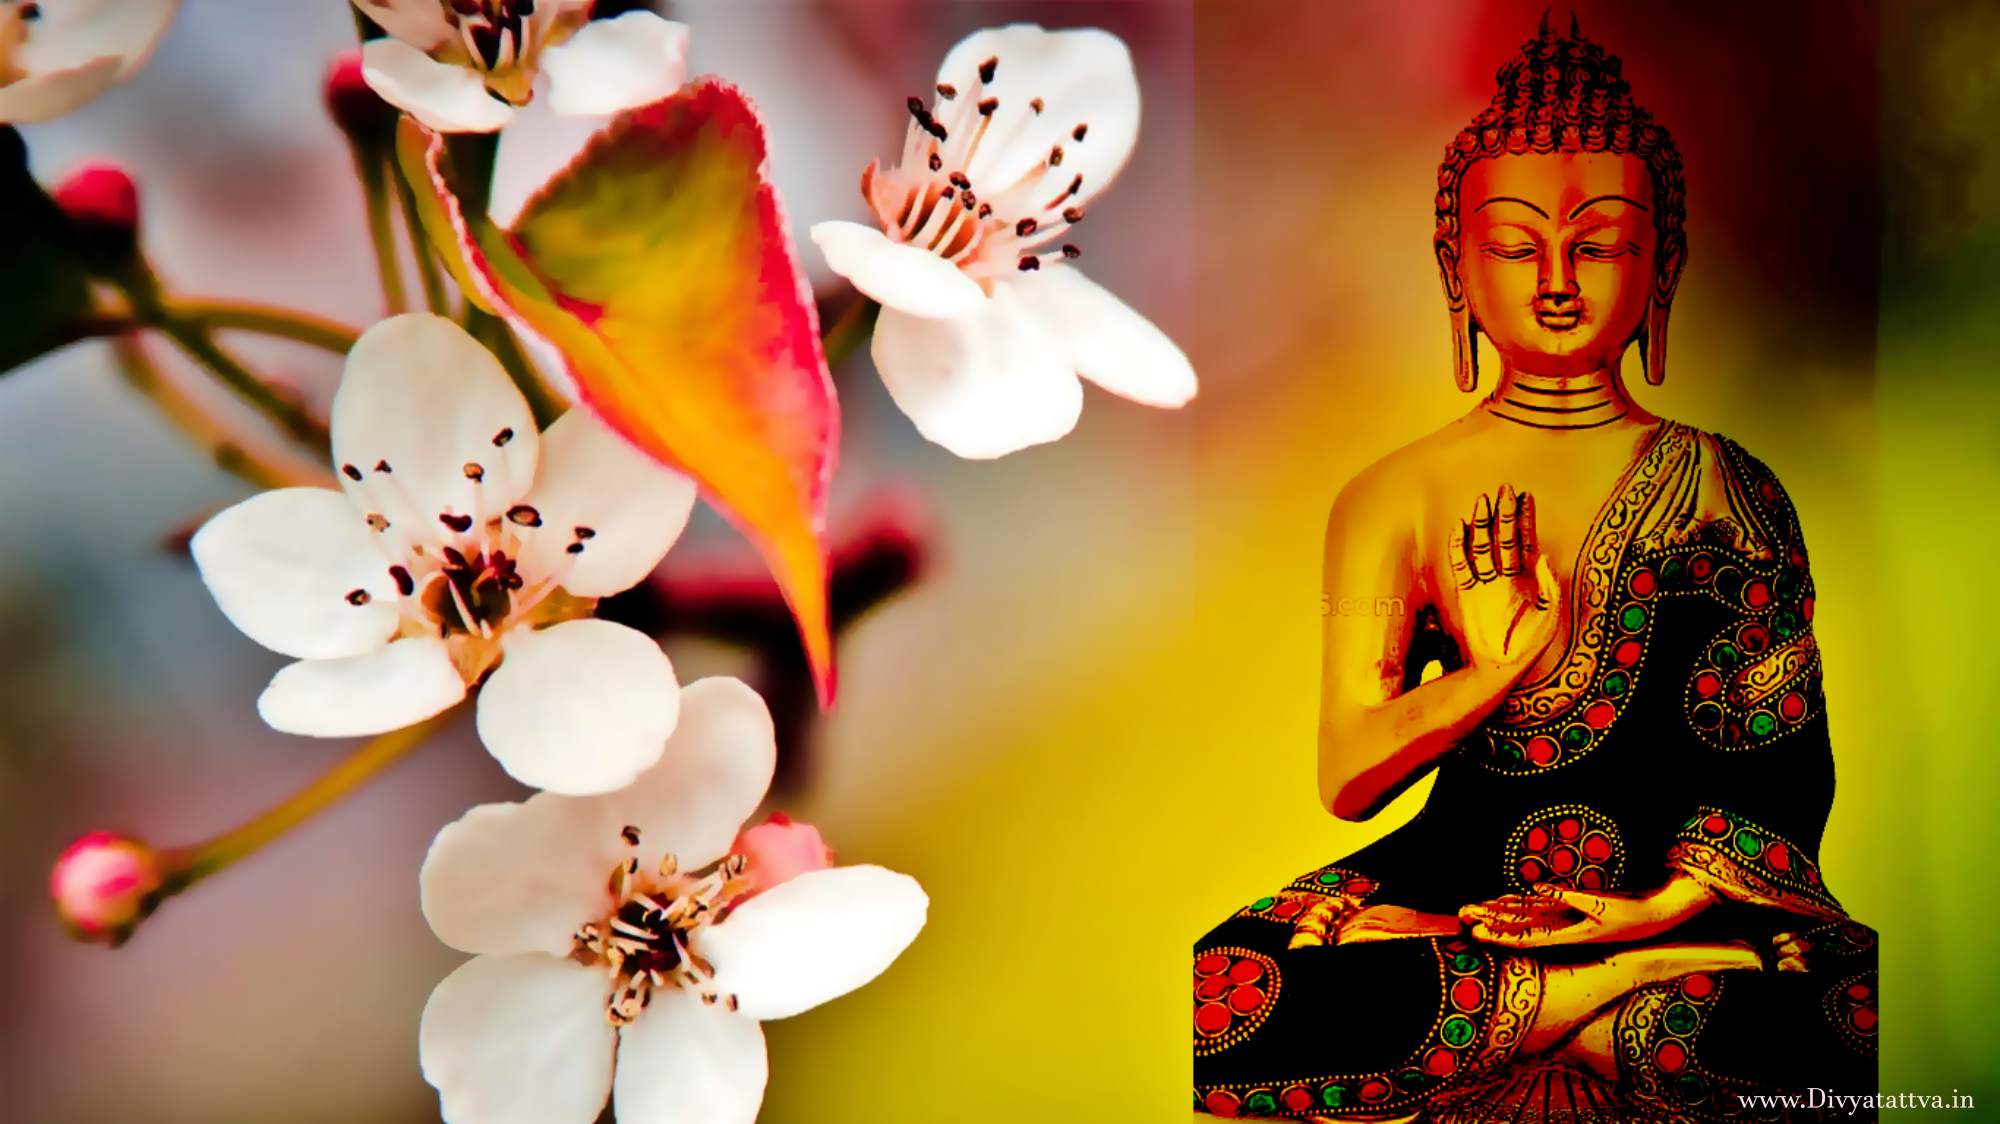  Buddha Hintergrundbild 2000x1124. Gautam Buddha 4K UHD Wallpaper Buddhism Picture for Beautiful Background